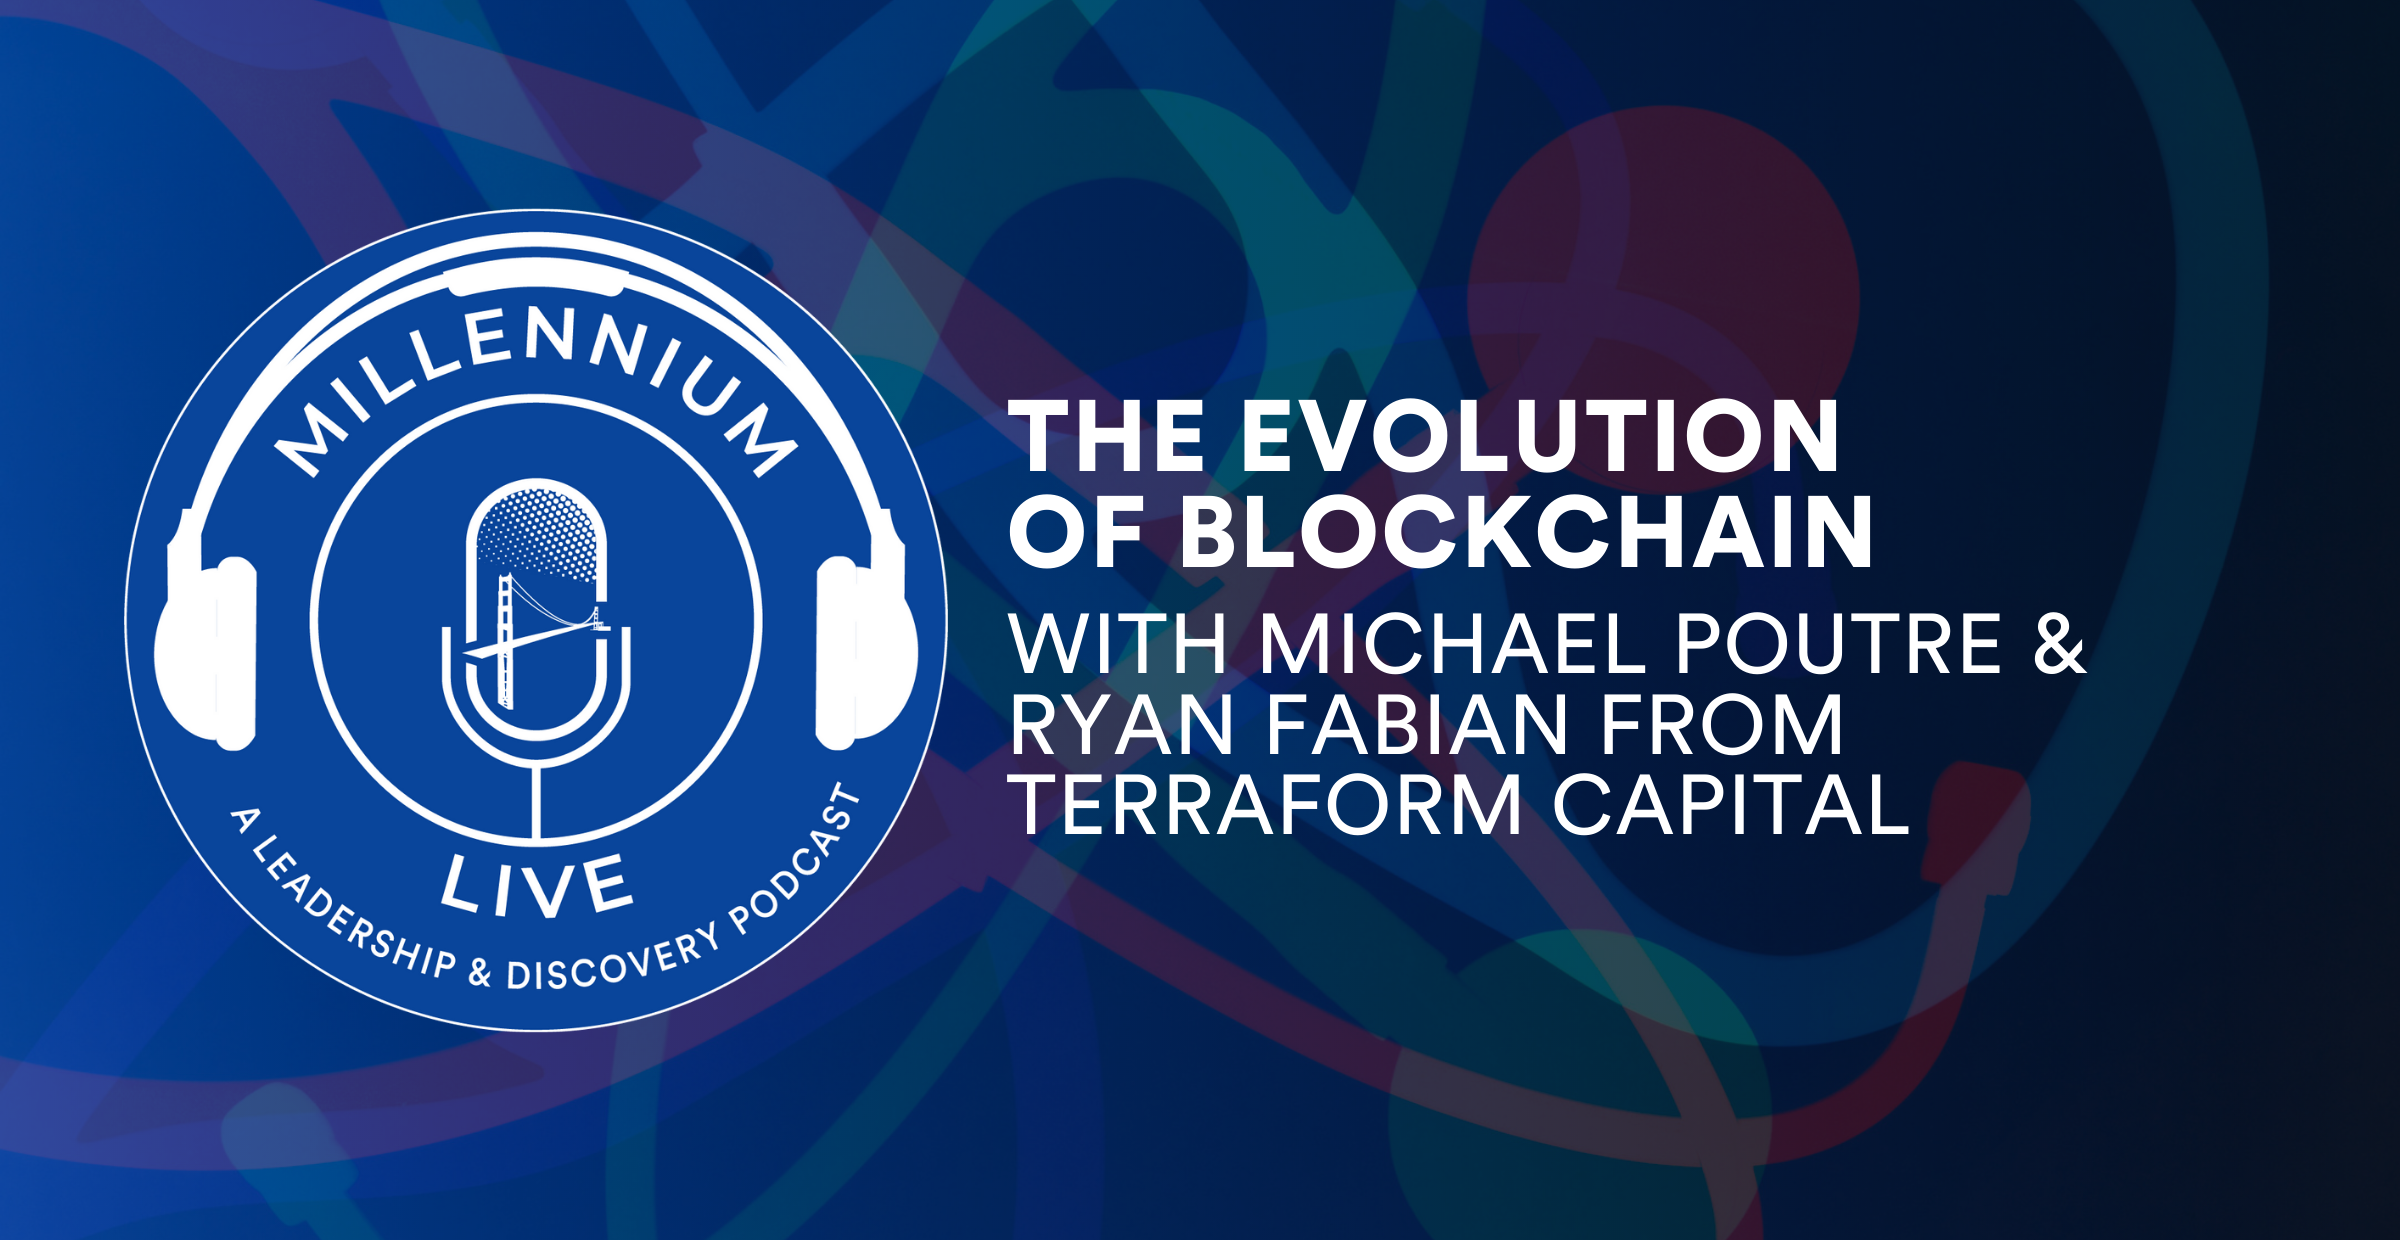 #MillenniumLive on the Evolution of Blockchain with Terraform Capital